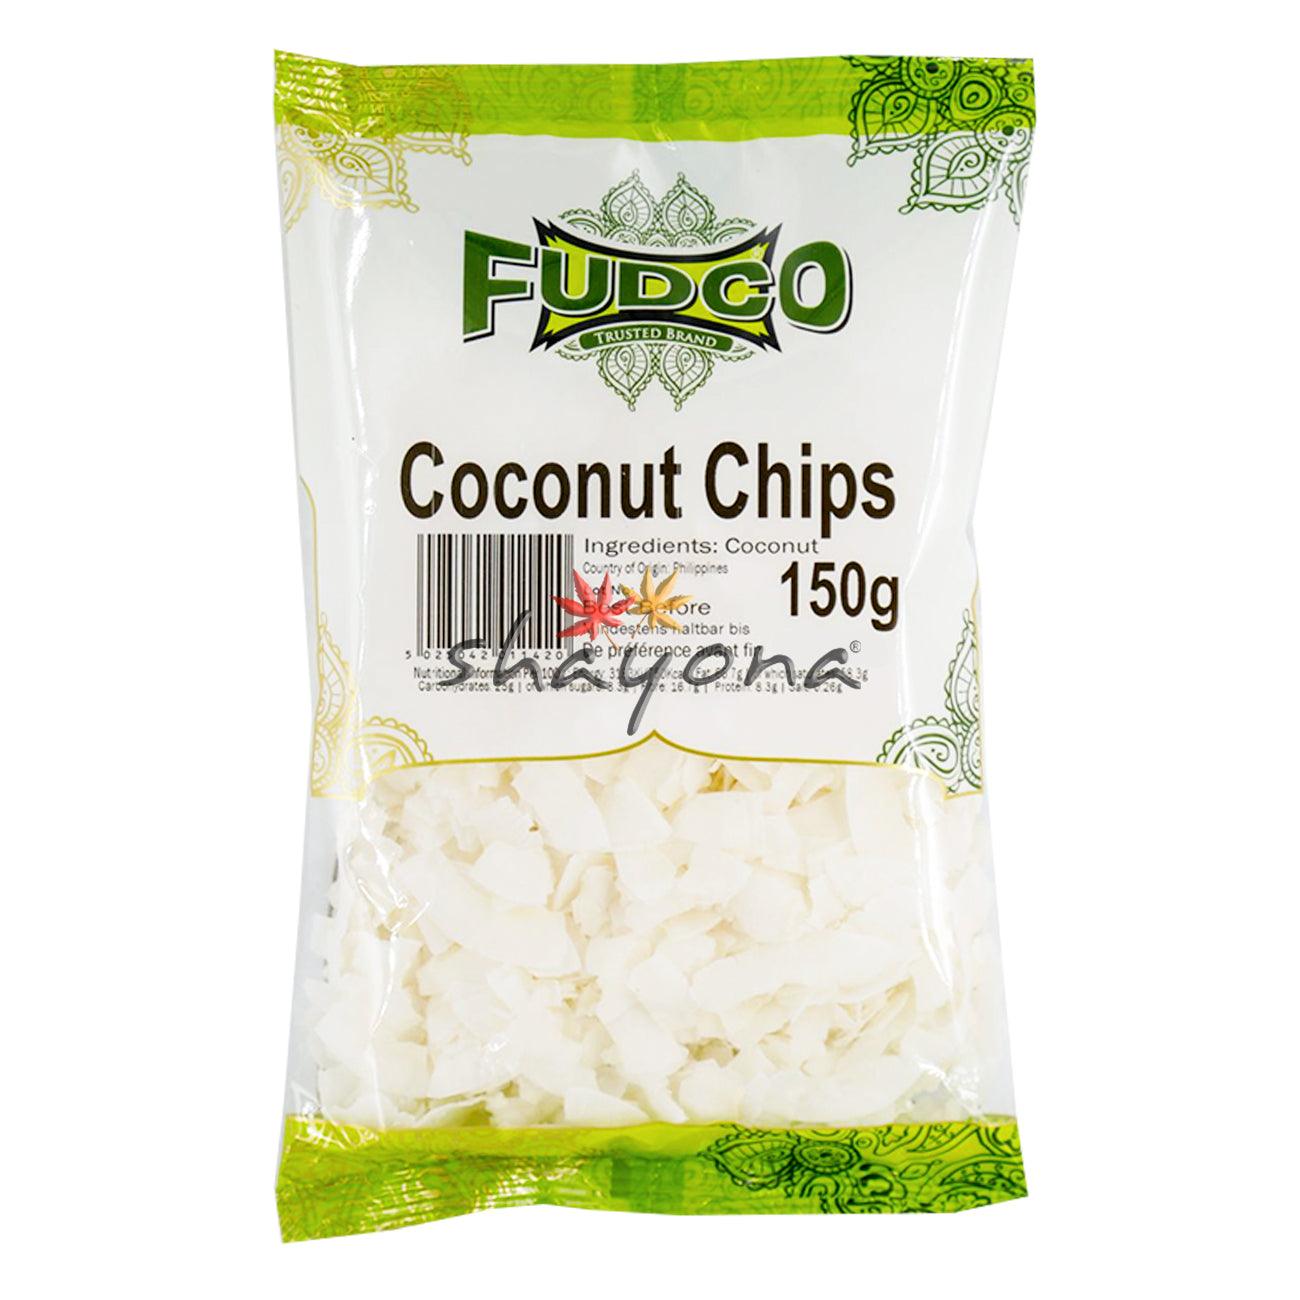 Fudco Coconut Chips - Shayona UK